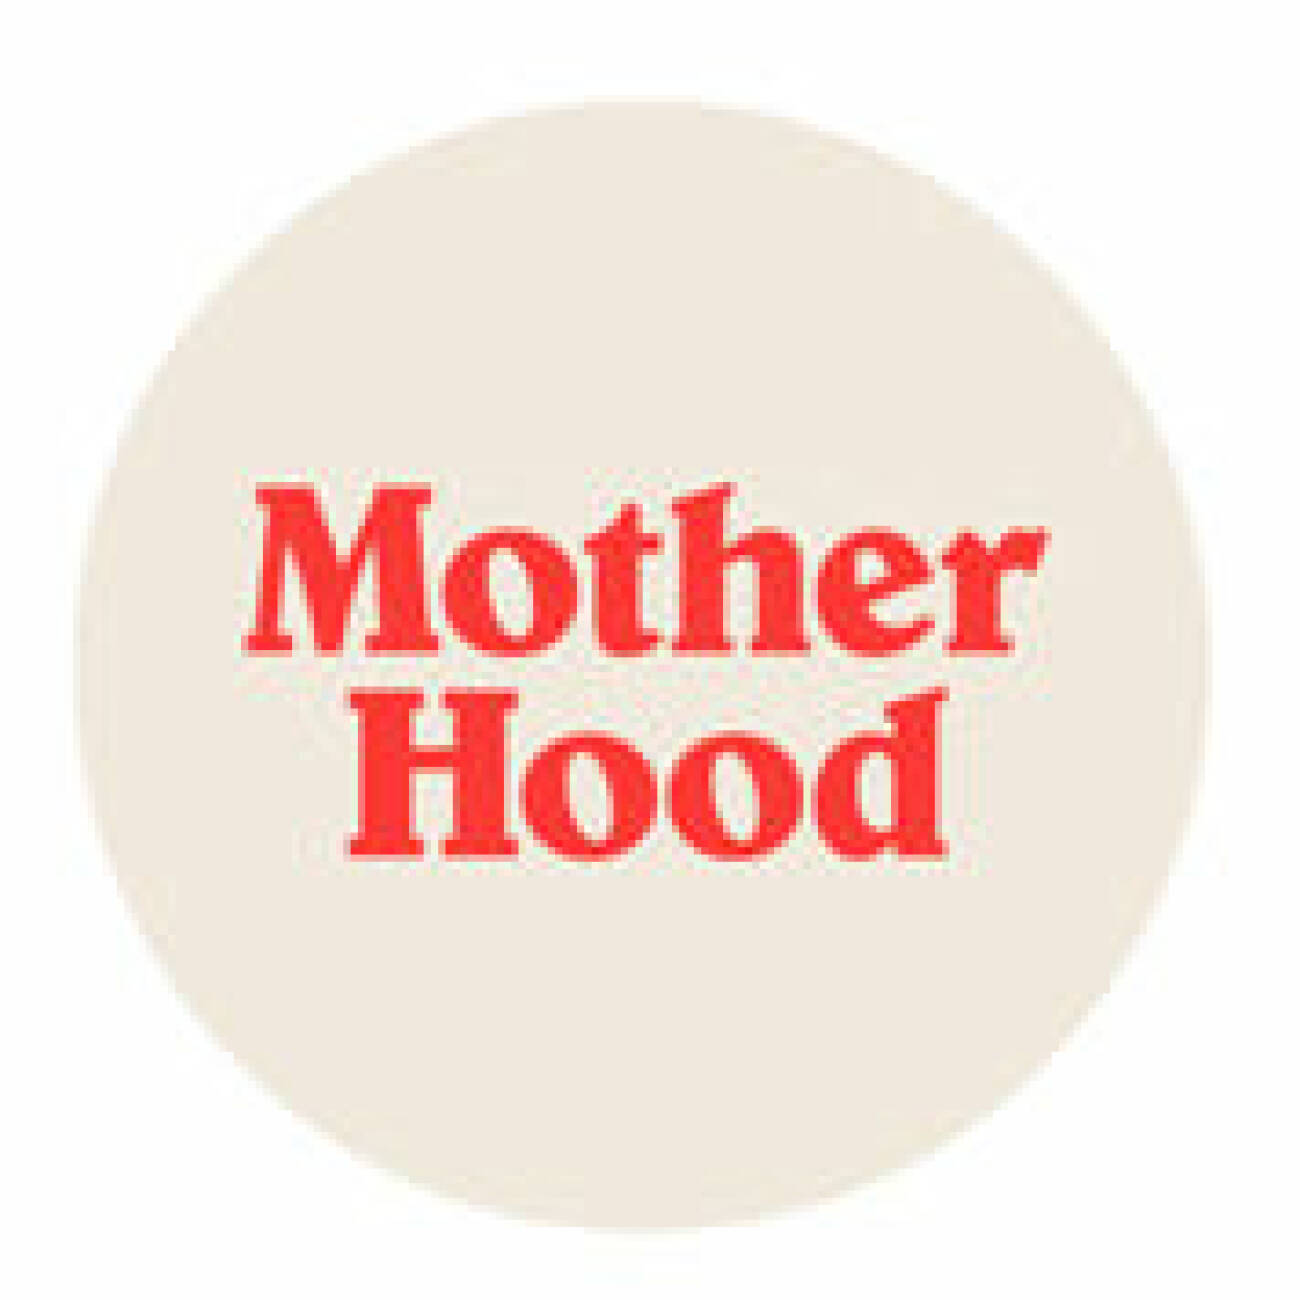 https://image.motherhood.se/redaktionen-cirkel.jpg.jpg?imageId=2580953&x=0&y=0&cropw=100&croph=100&width=1318&height=1318